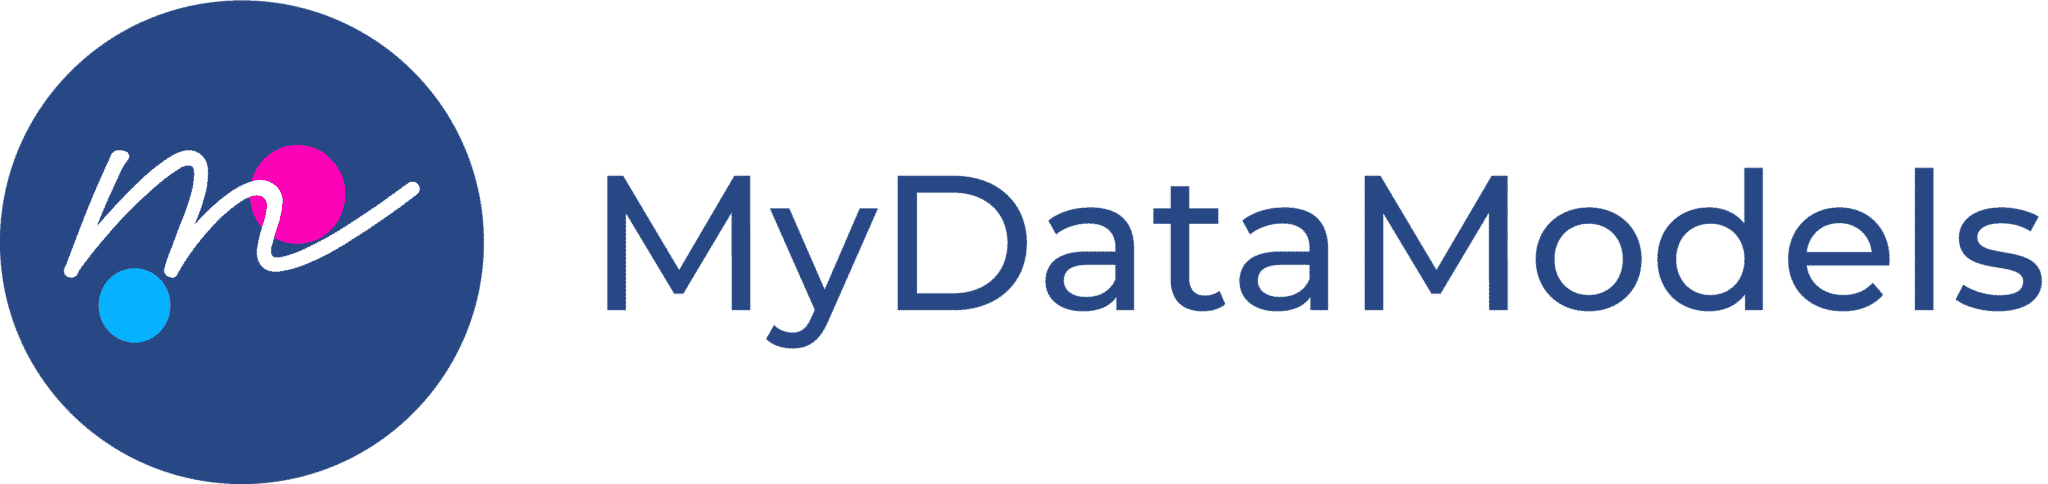 IPE - Start-up MyDataModels